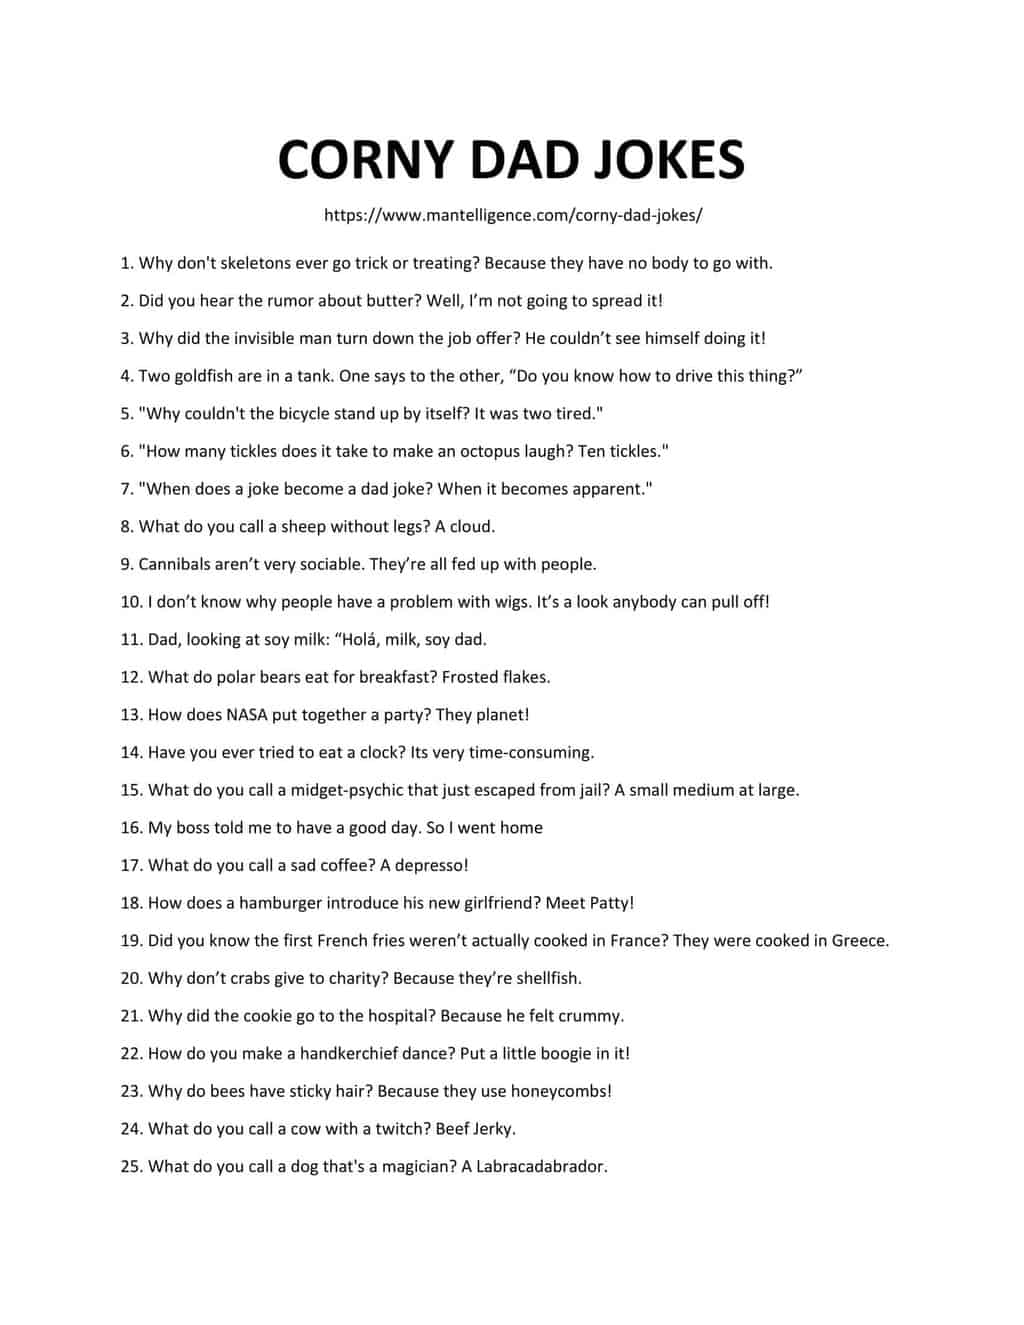 list of corny dad jokes-1